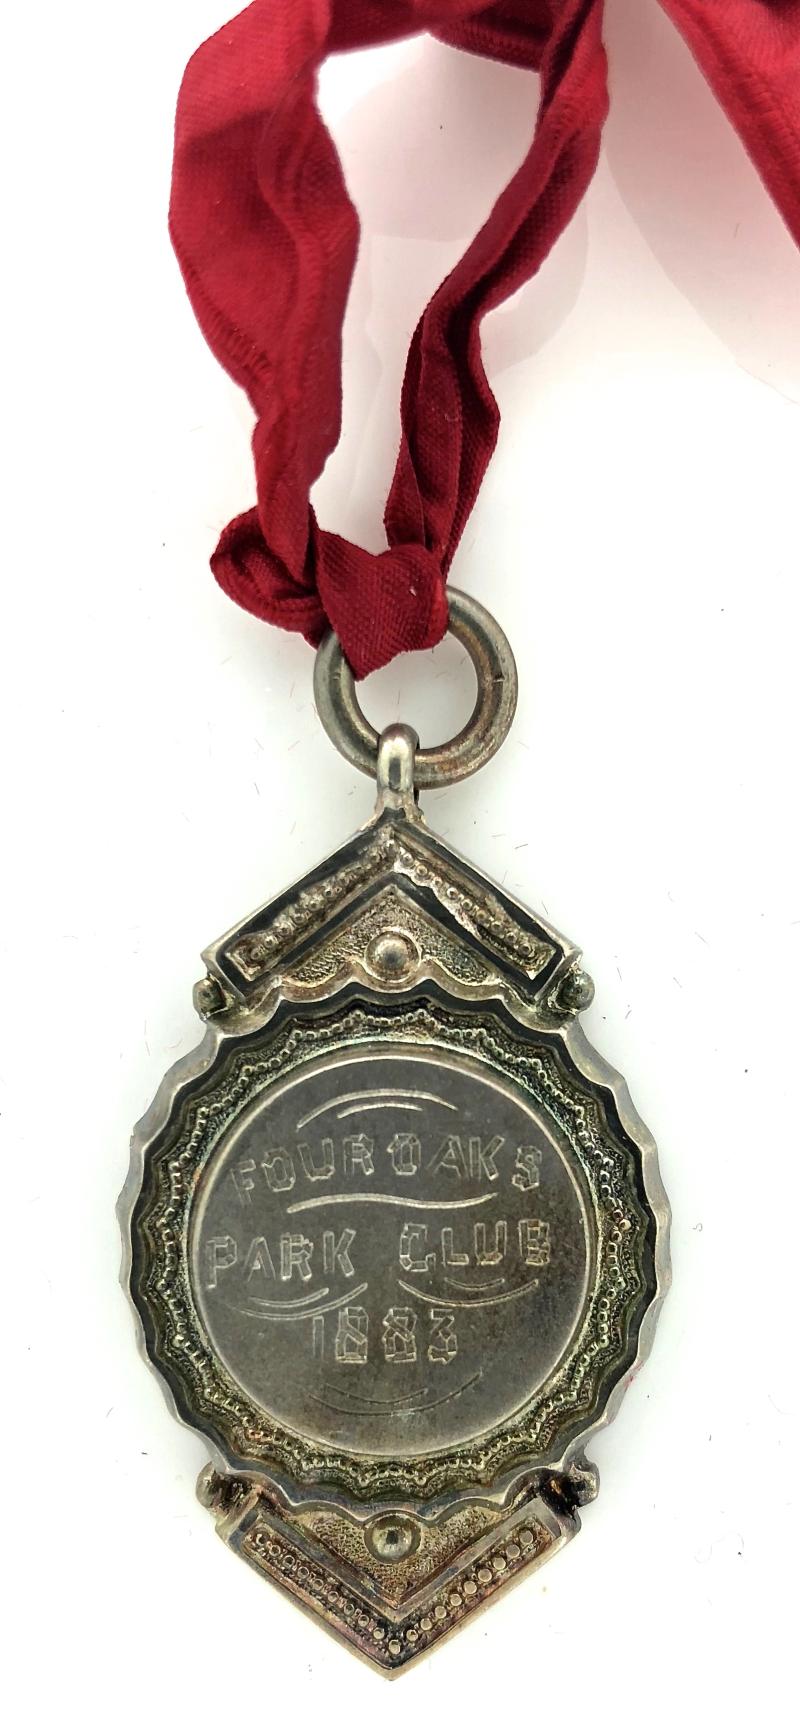 1883 Four Oaks Park Club horse racing badge